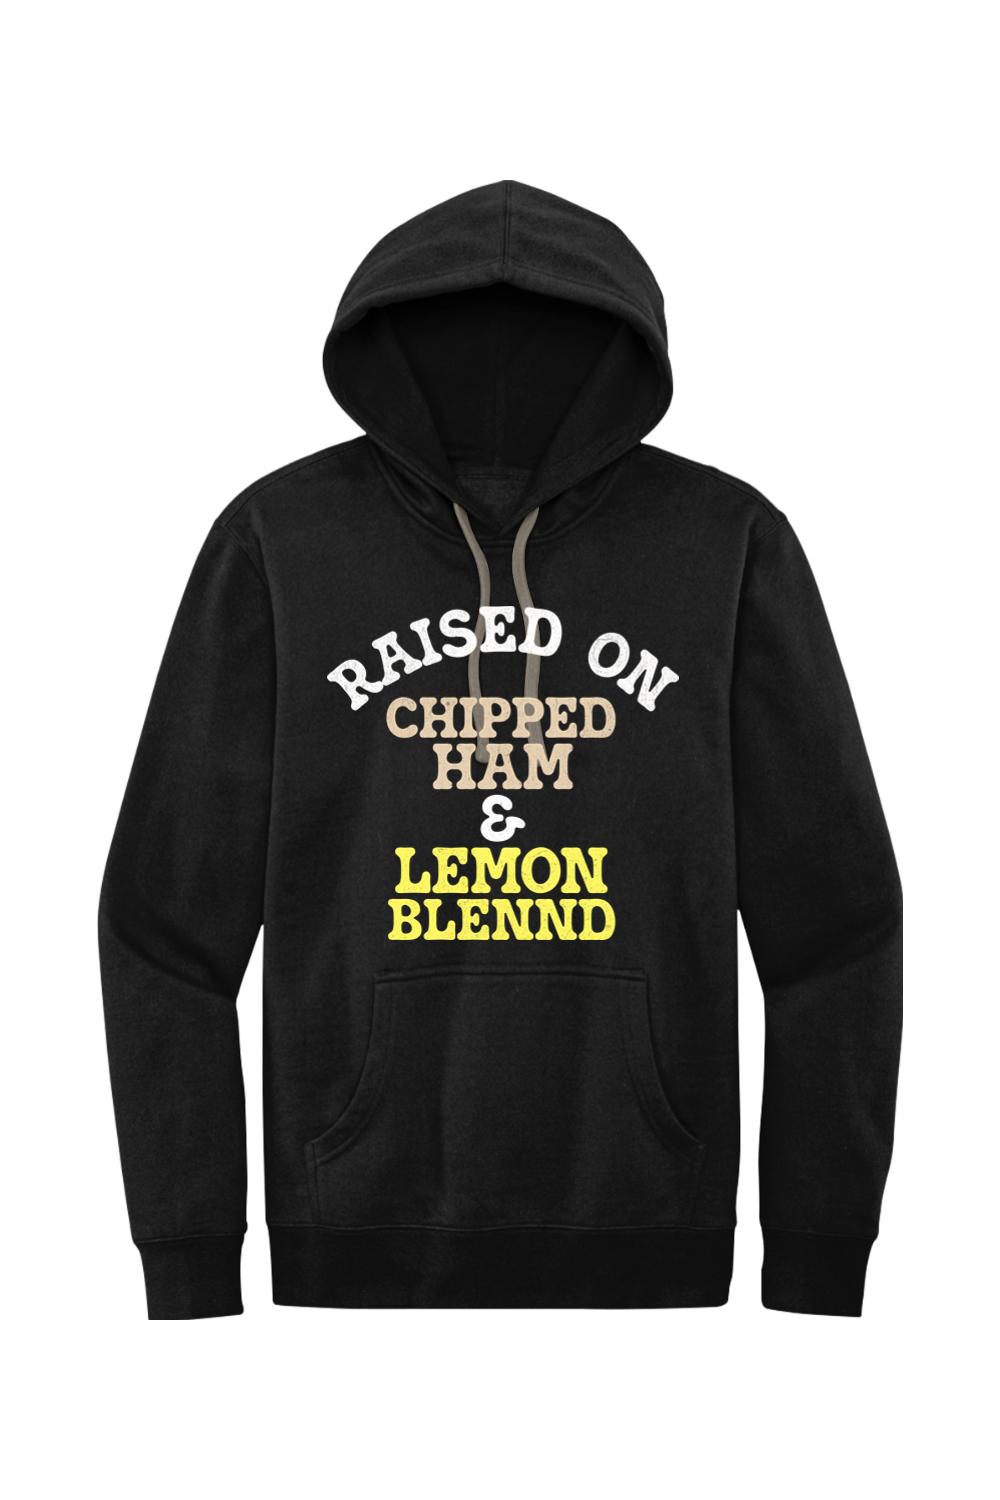 Raised on Chipped Ham & Lemon Blennd - Fleece Hoodie - Yinzylvania